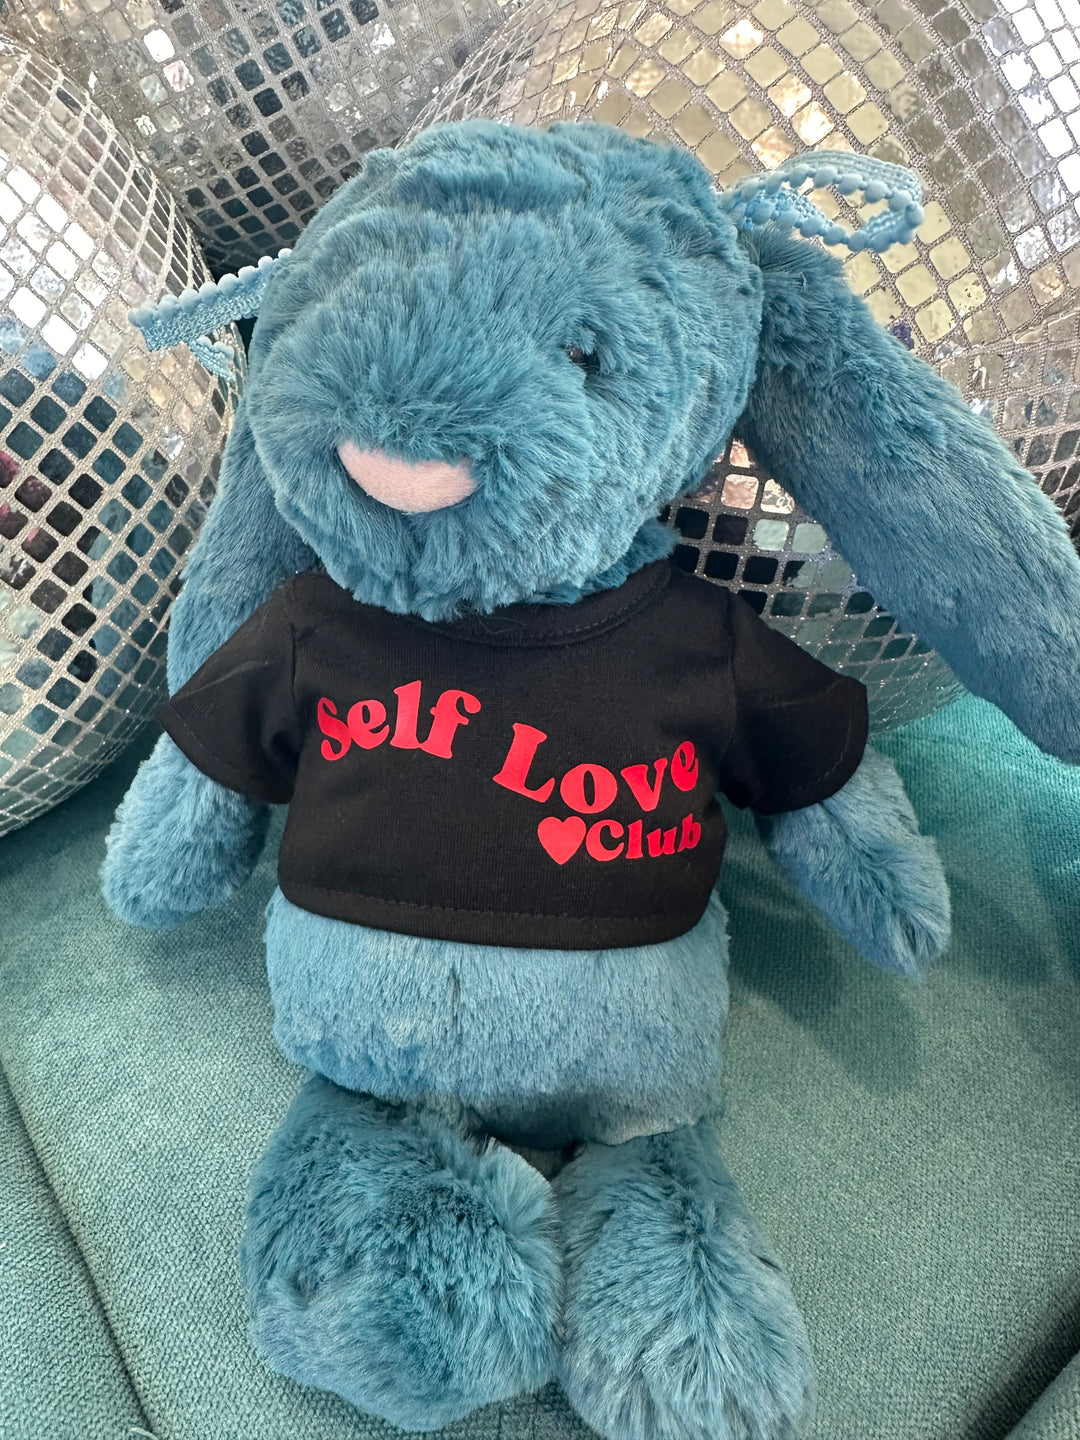 Self Love Club Jelly Shirt